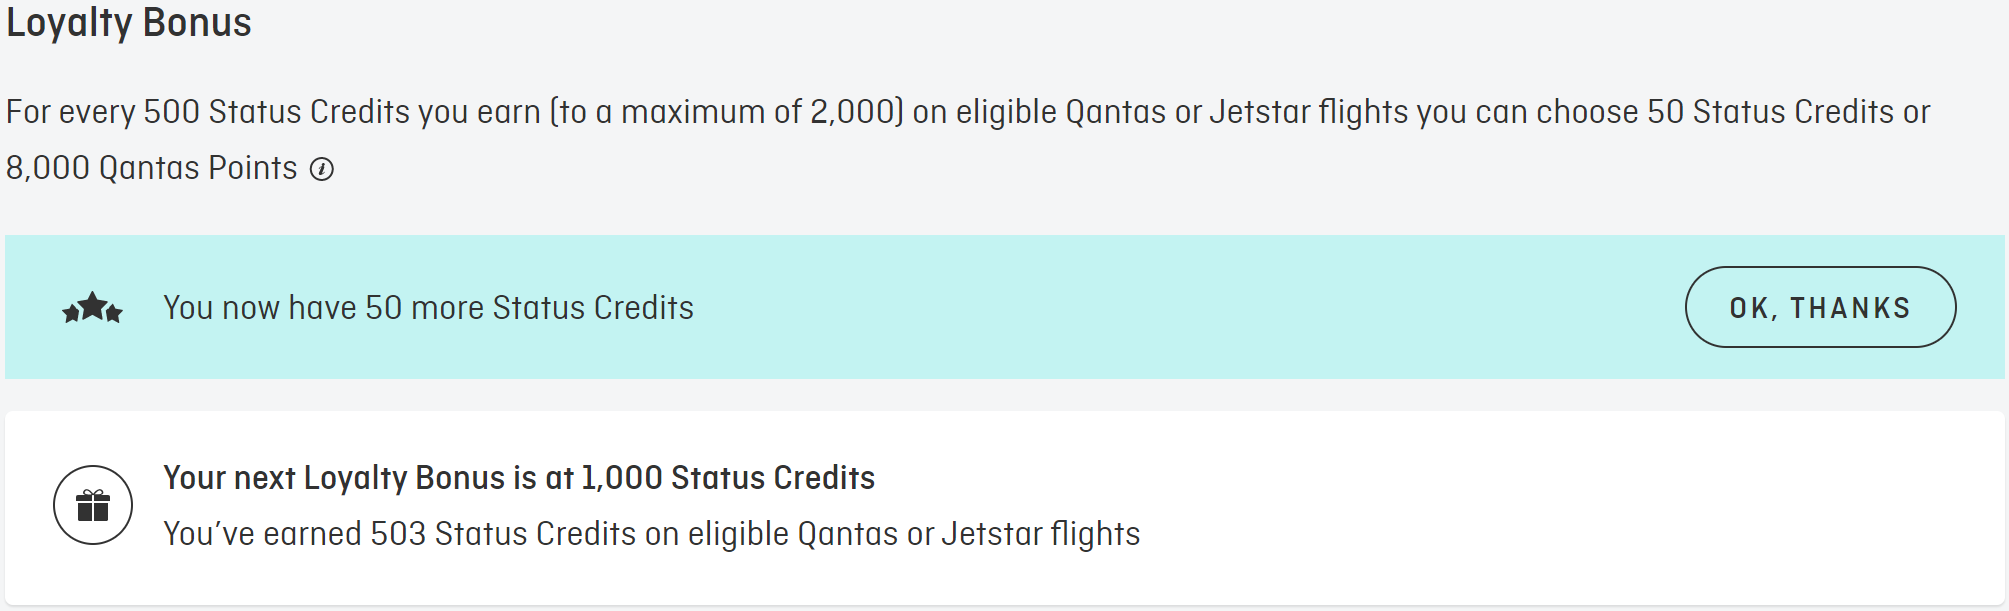 Qantas Loyalty Bonus choice selected